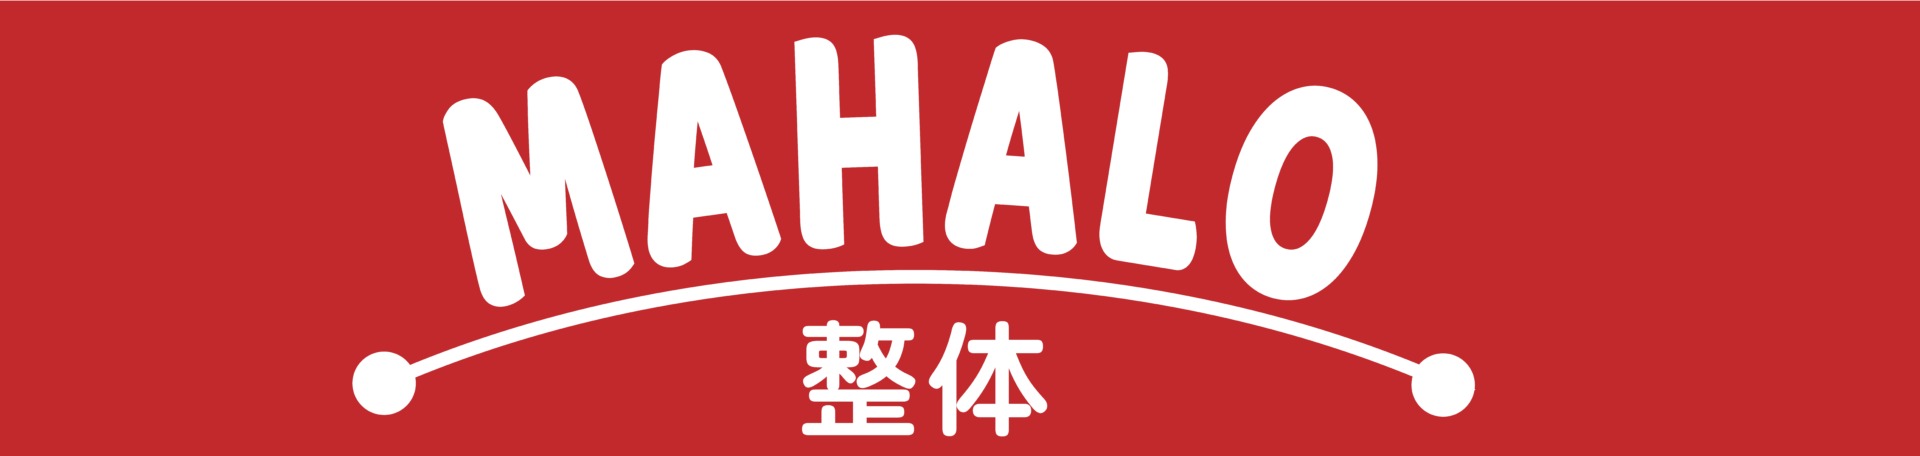 MAHALOA : Brand Short Description Type Here.